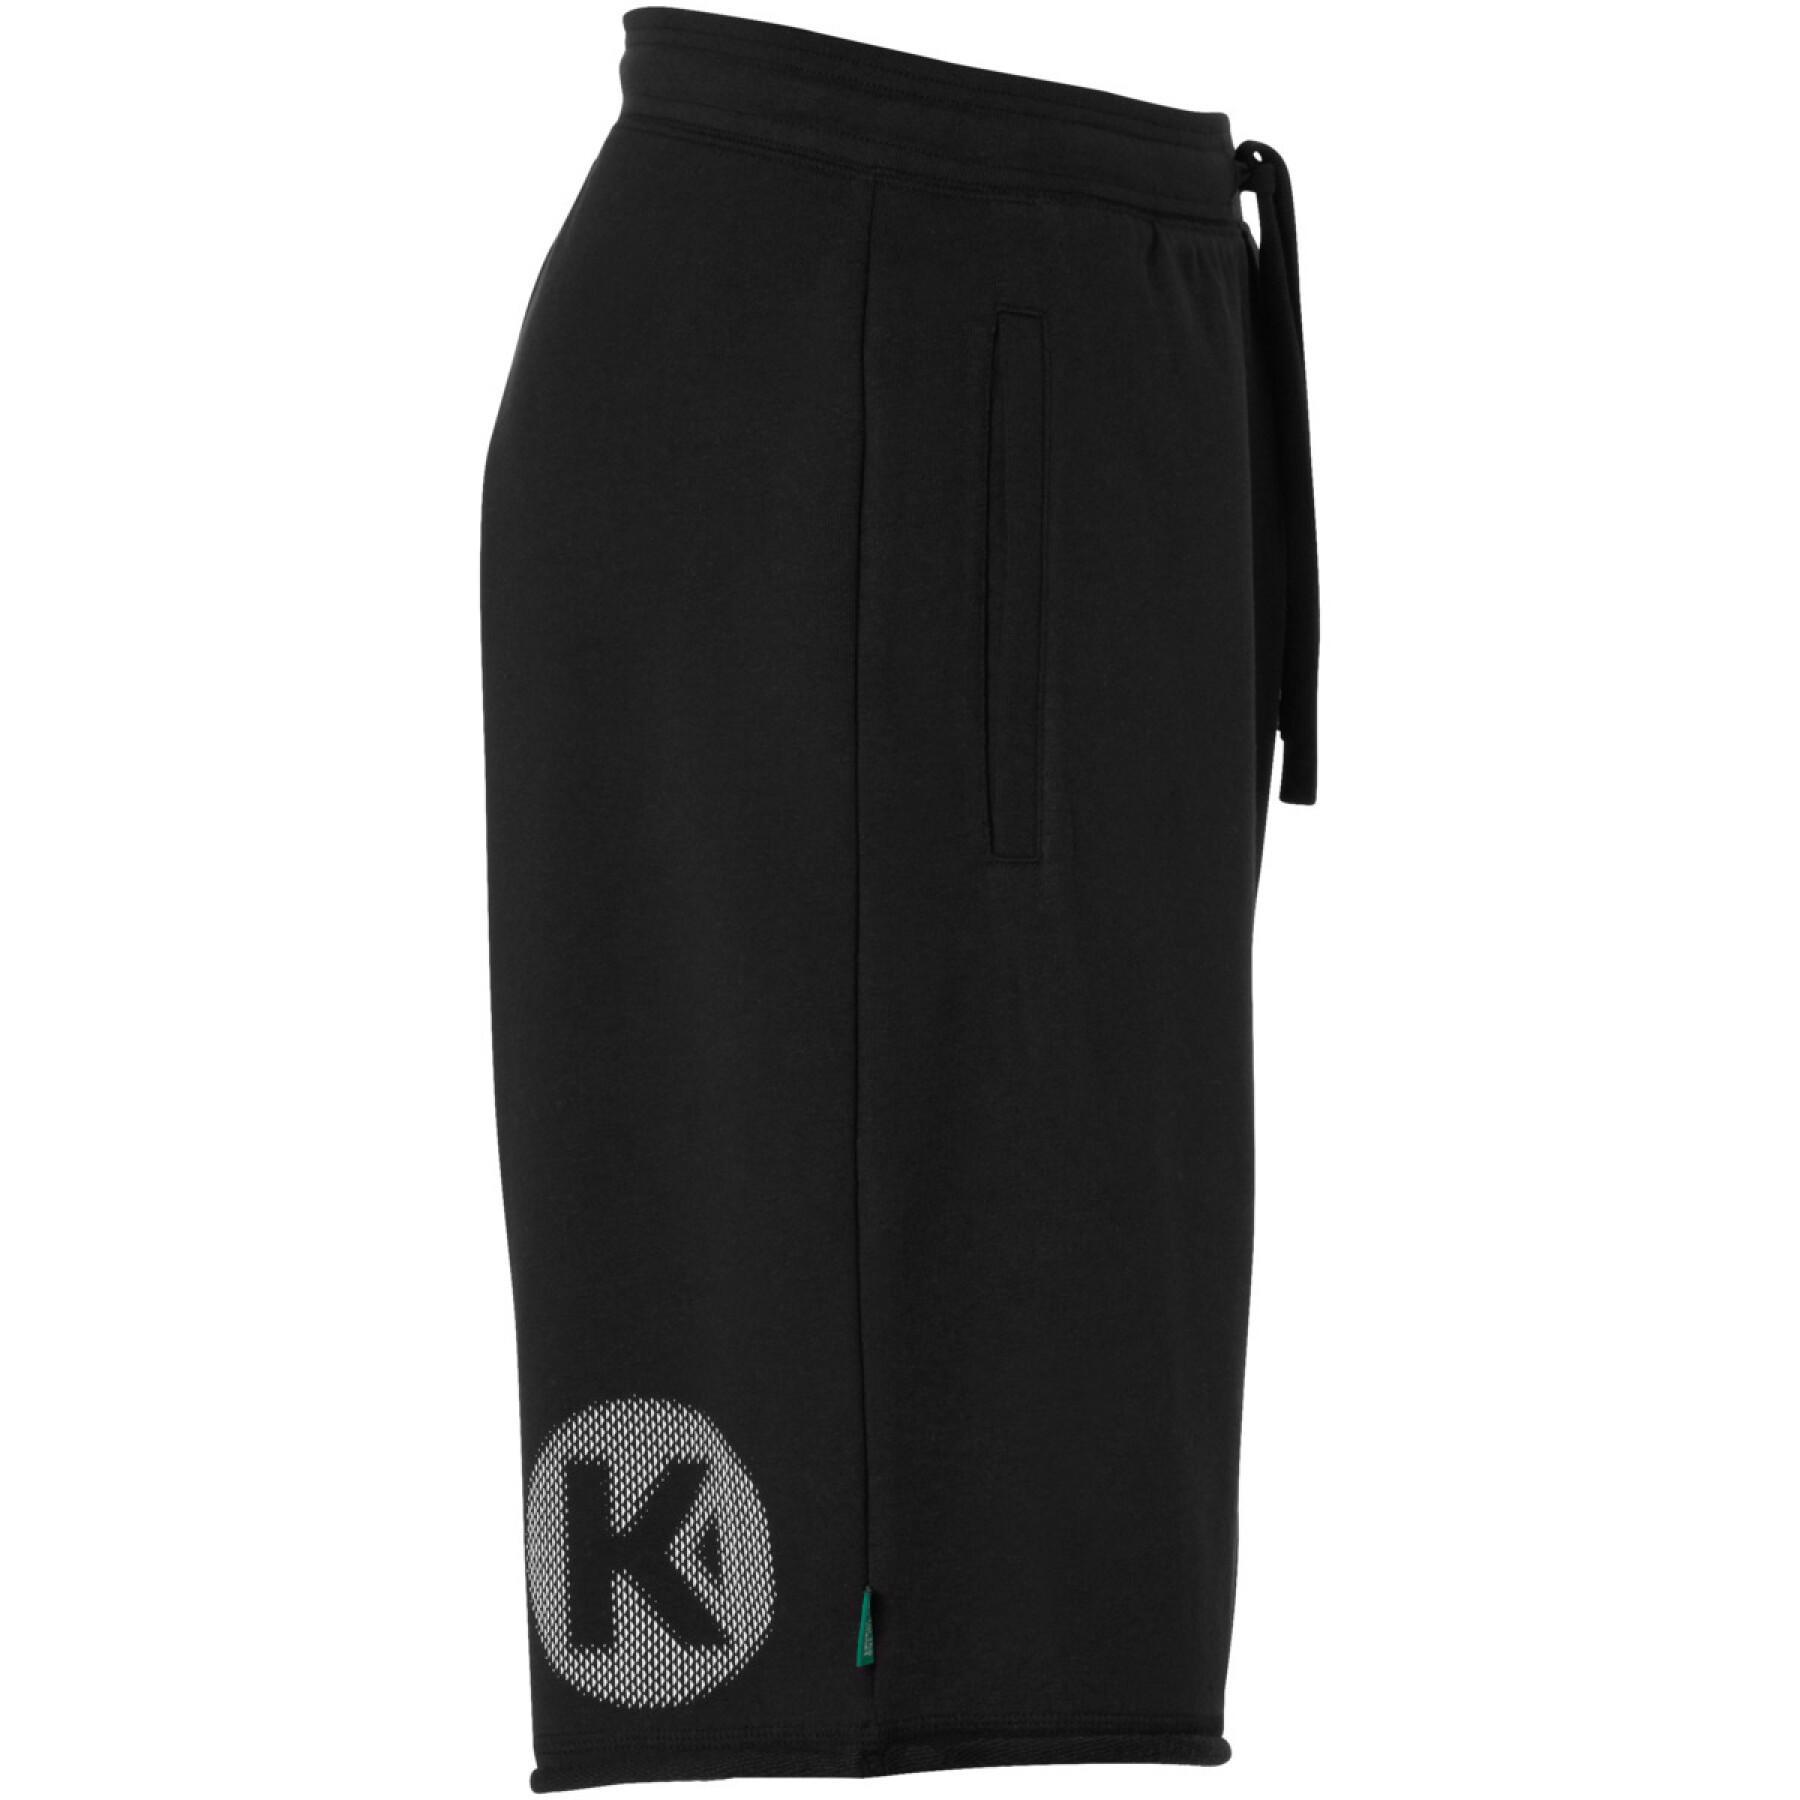 Shorts Kempa Core 26